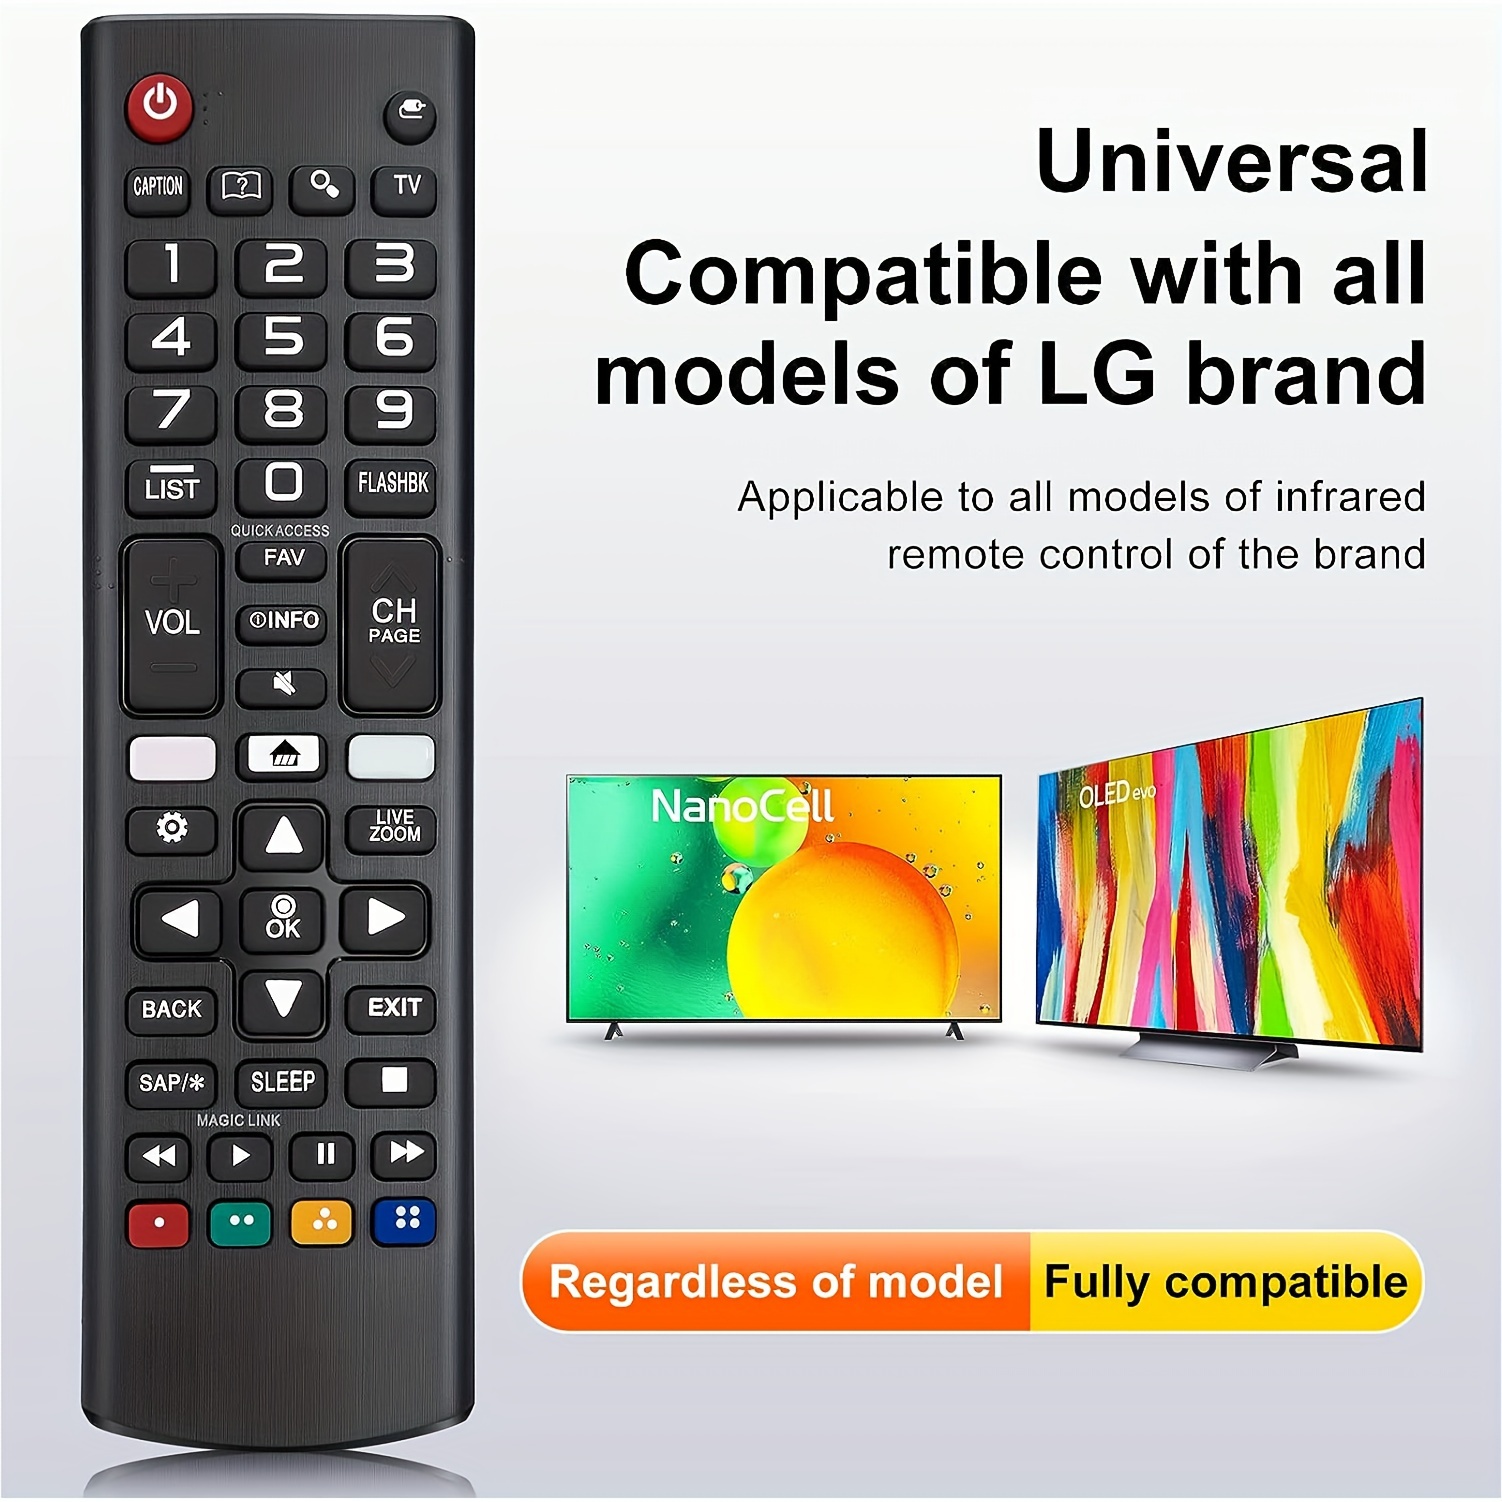 Telecomando Universale Tv LG TeKone Rm-909e Universal Remote Control hsb -  DipaShop